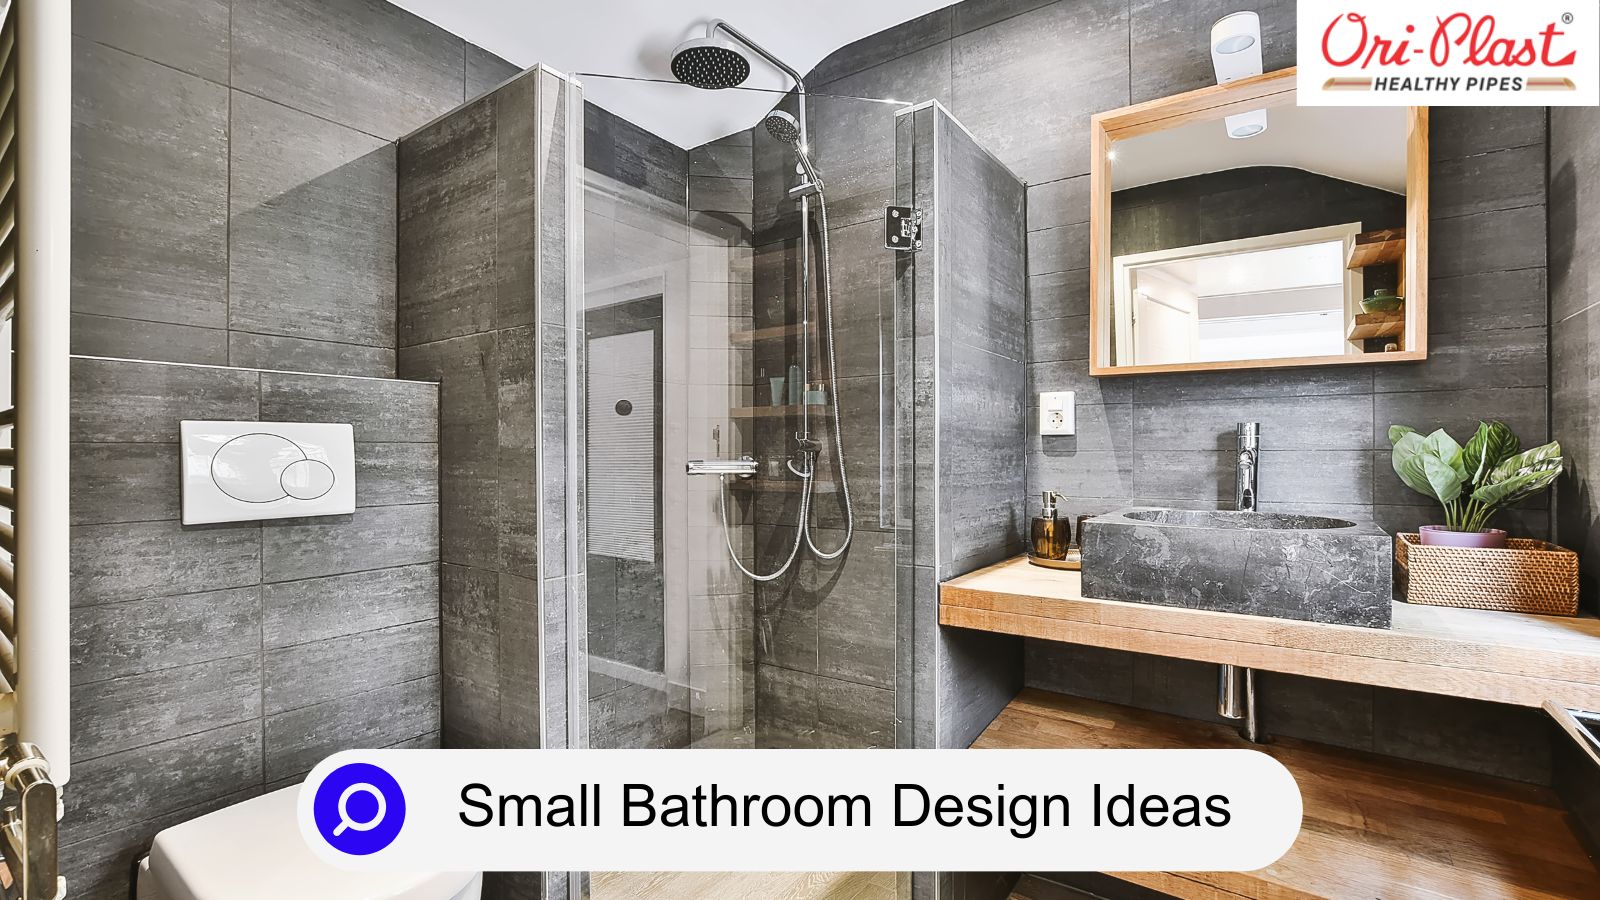 Bathroom Interior Design Services in Miami